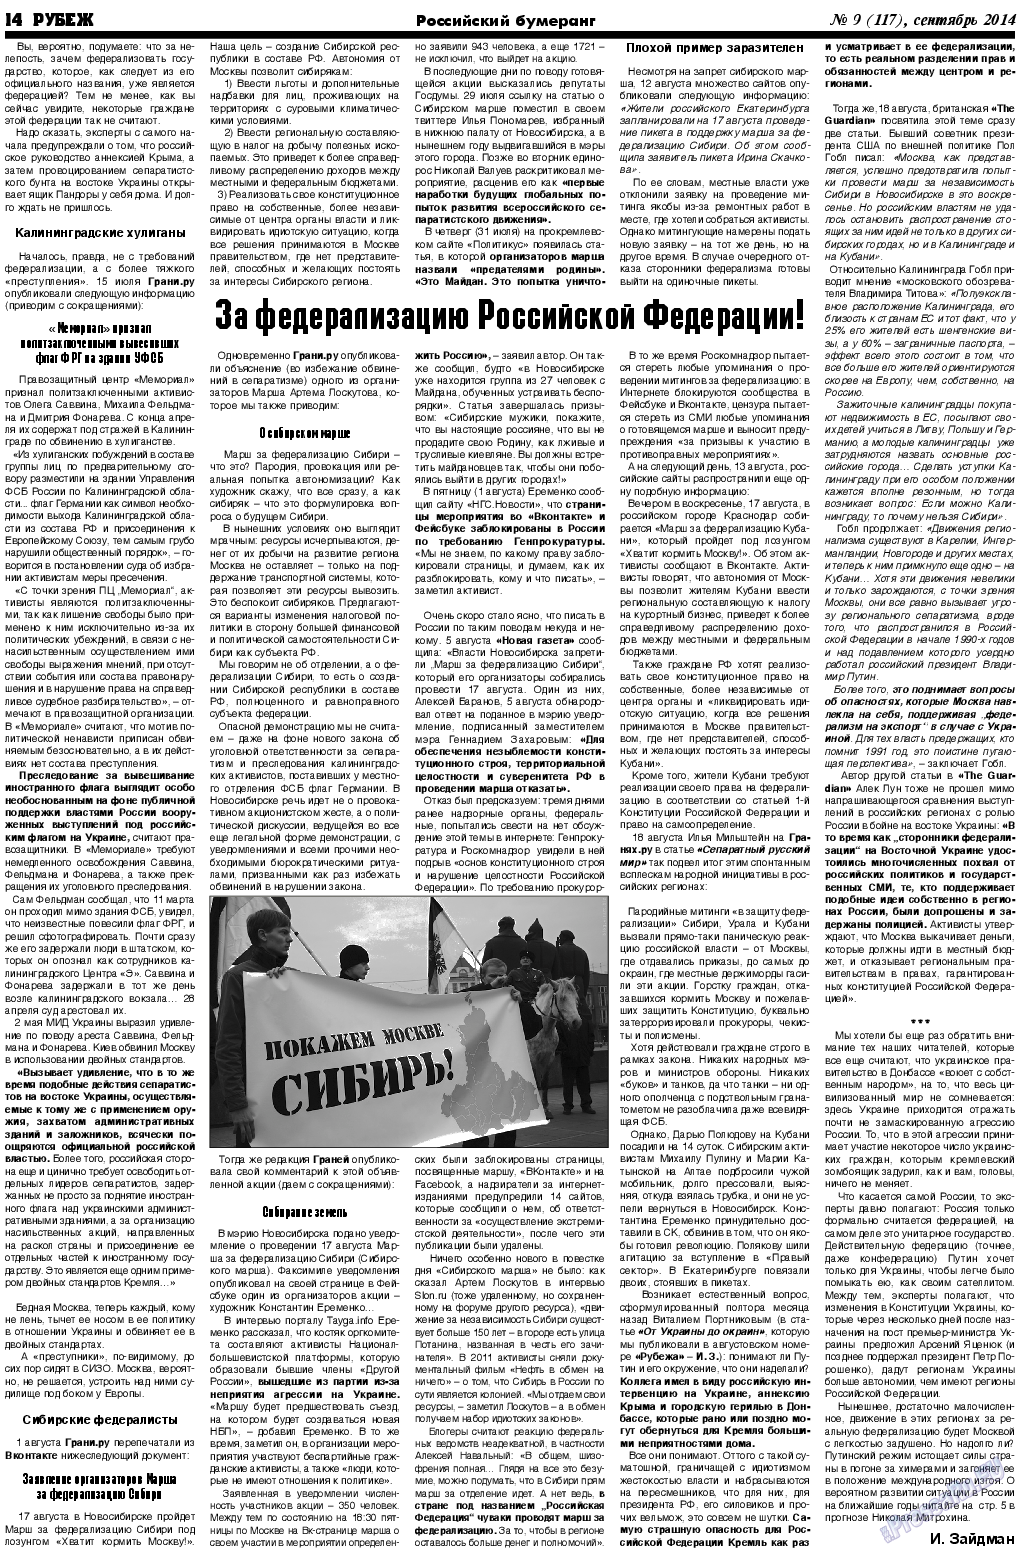 Рубеж, газета. 2014 №9 стр.14